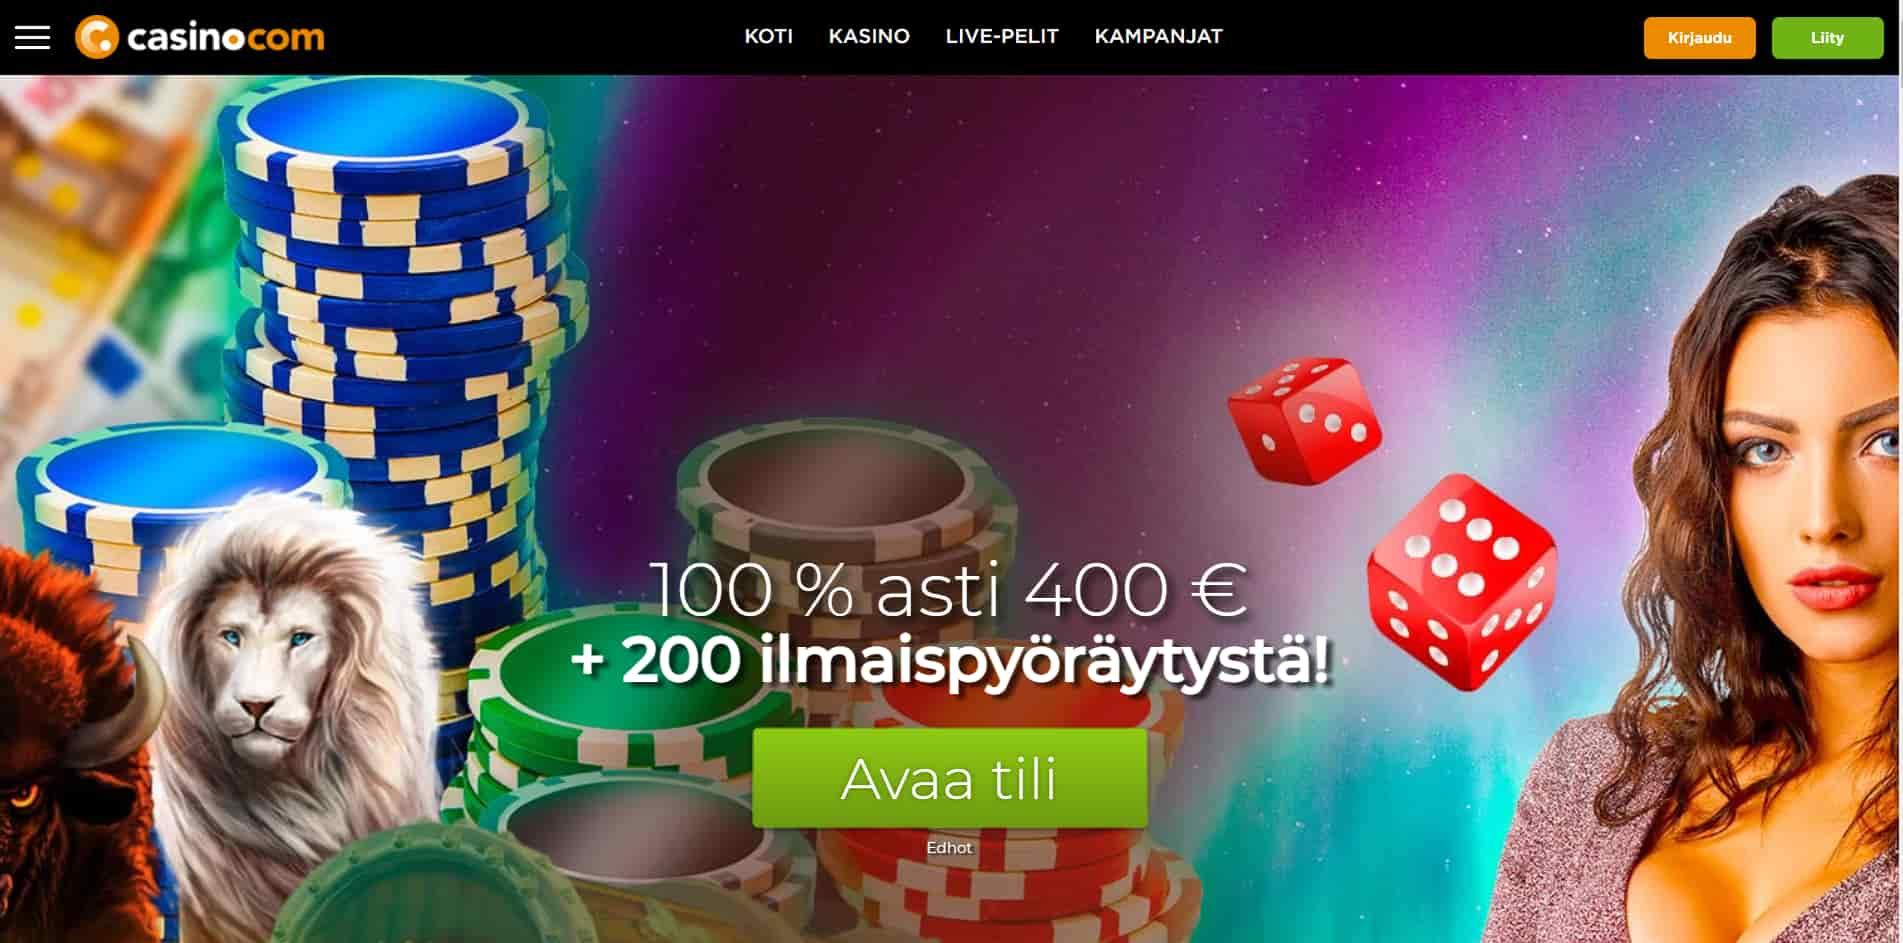 Casinocom casino homepage